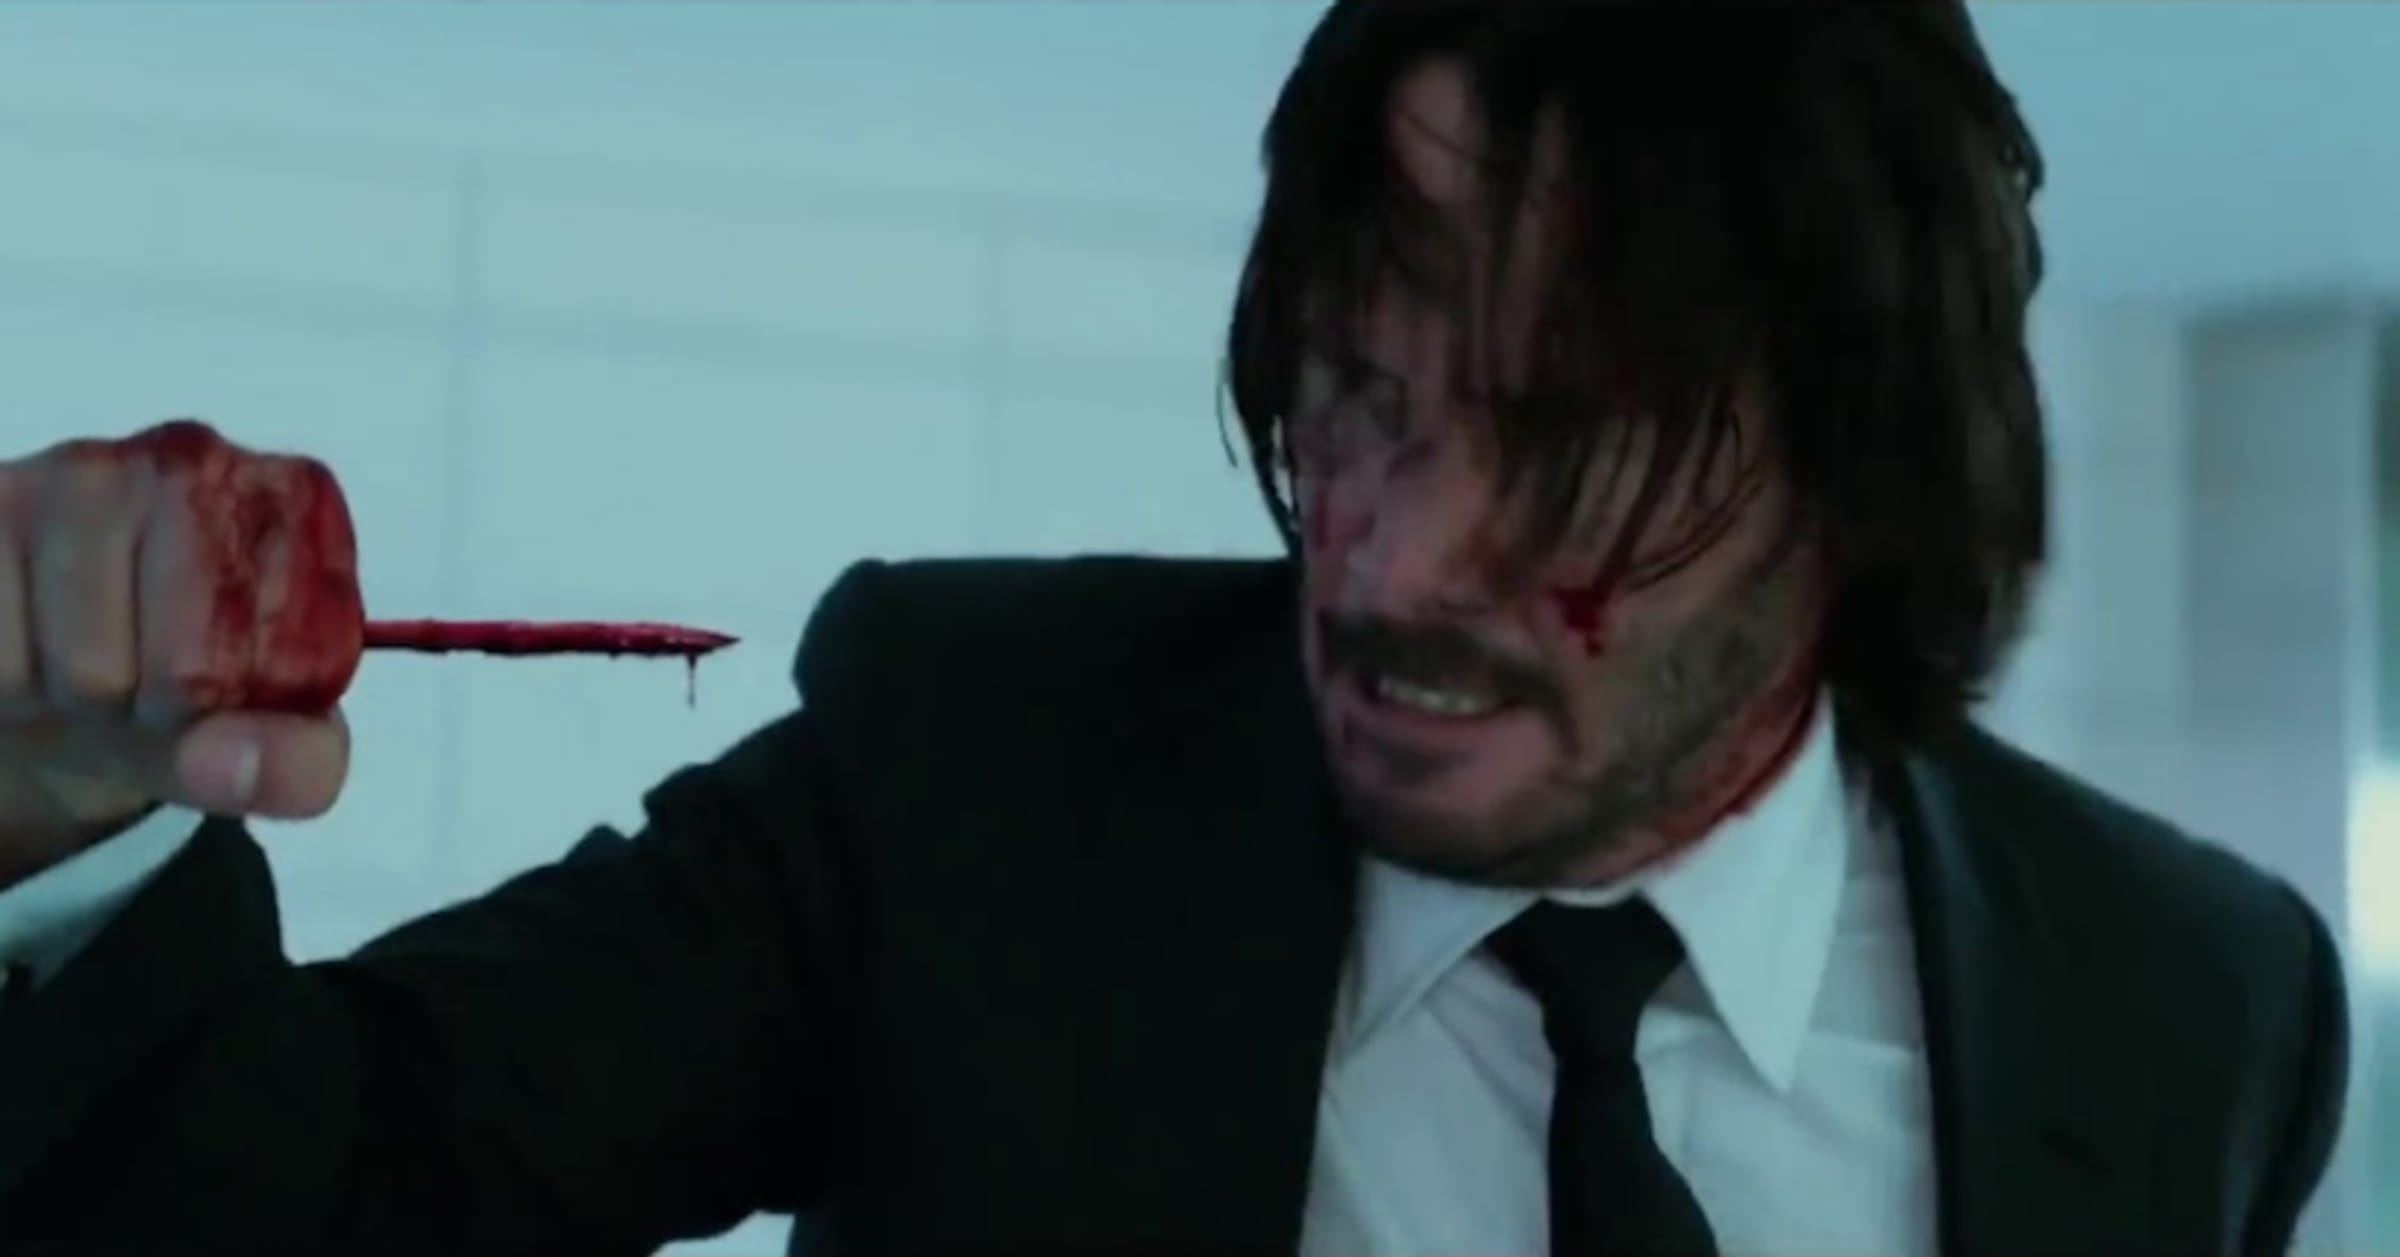 Keanu Reeves Is Desperate To Make John Wick 5 Reveals Director